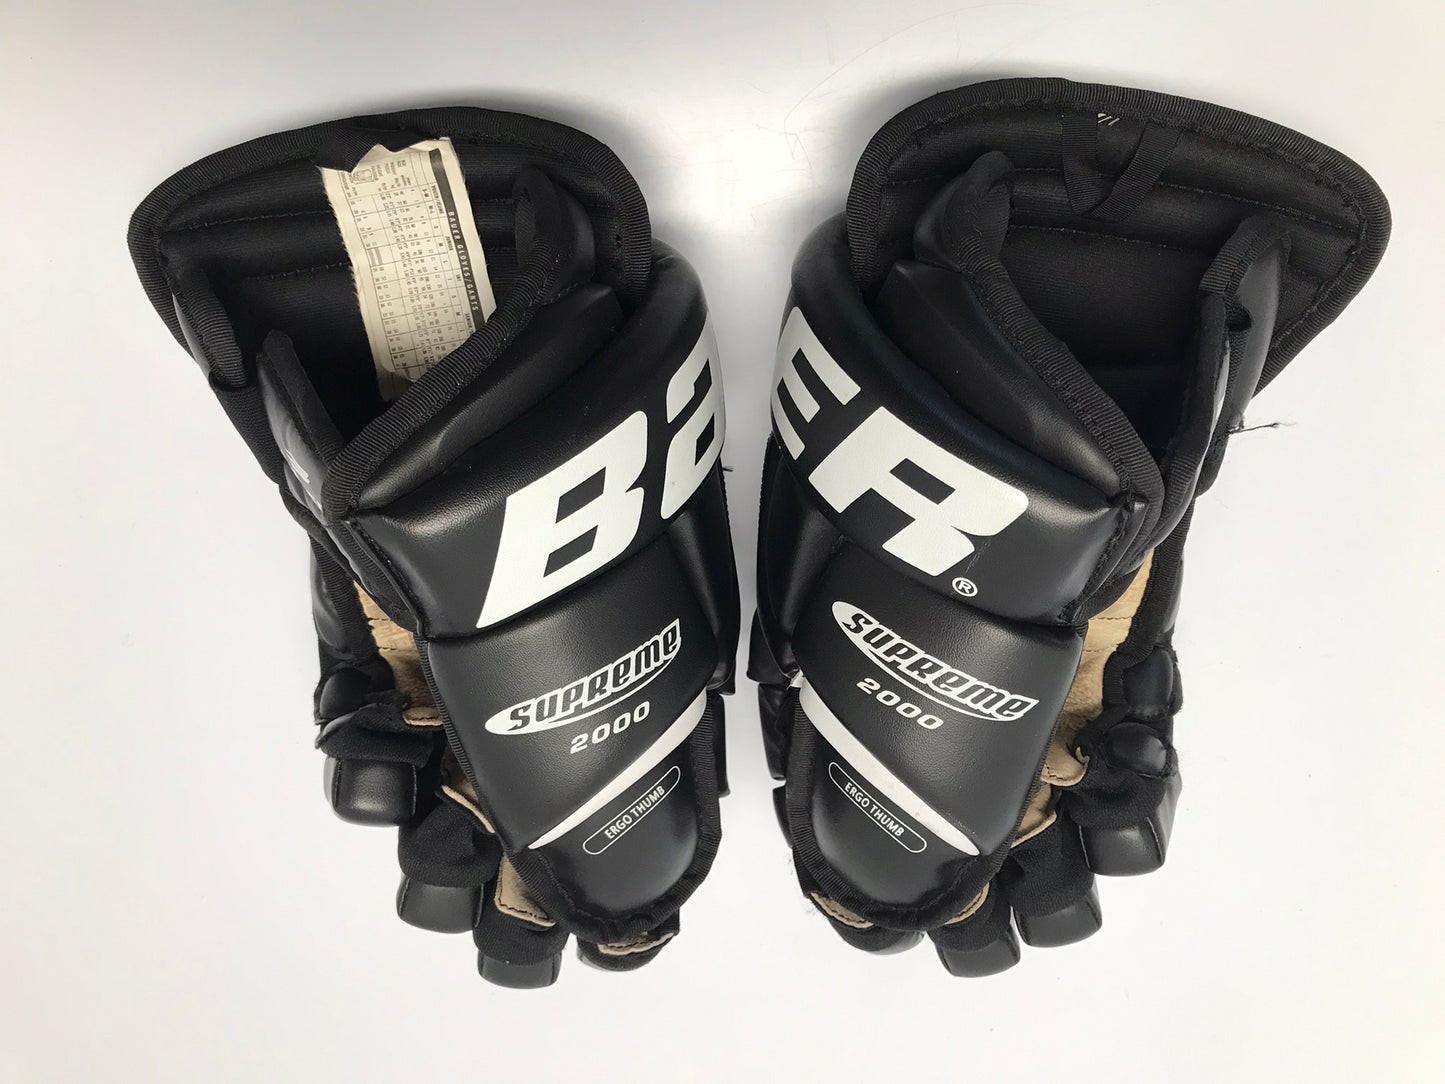 Hockey Gloves Men's Size 13 Bauer Supreme 2000 Excellent